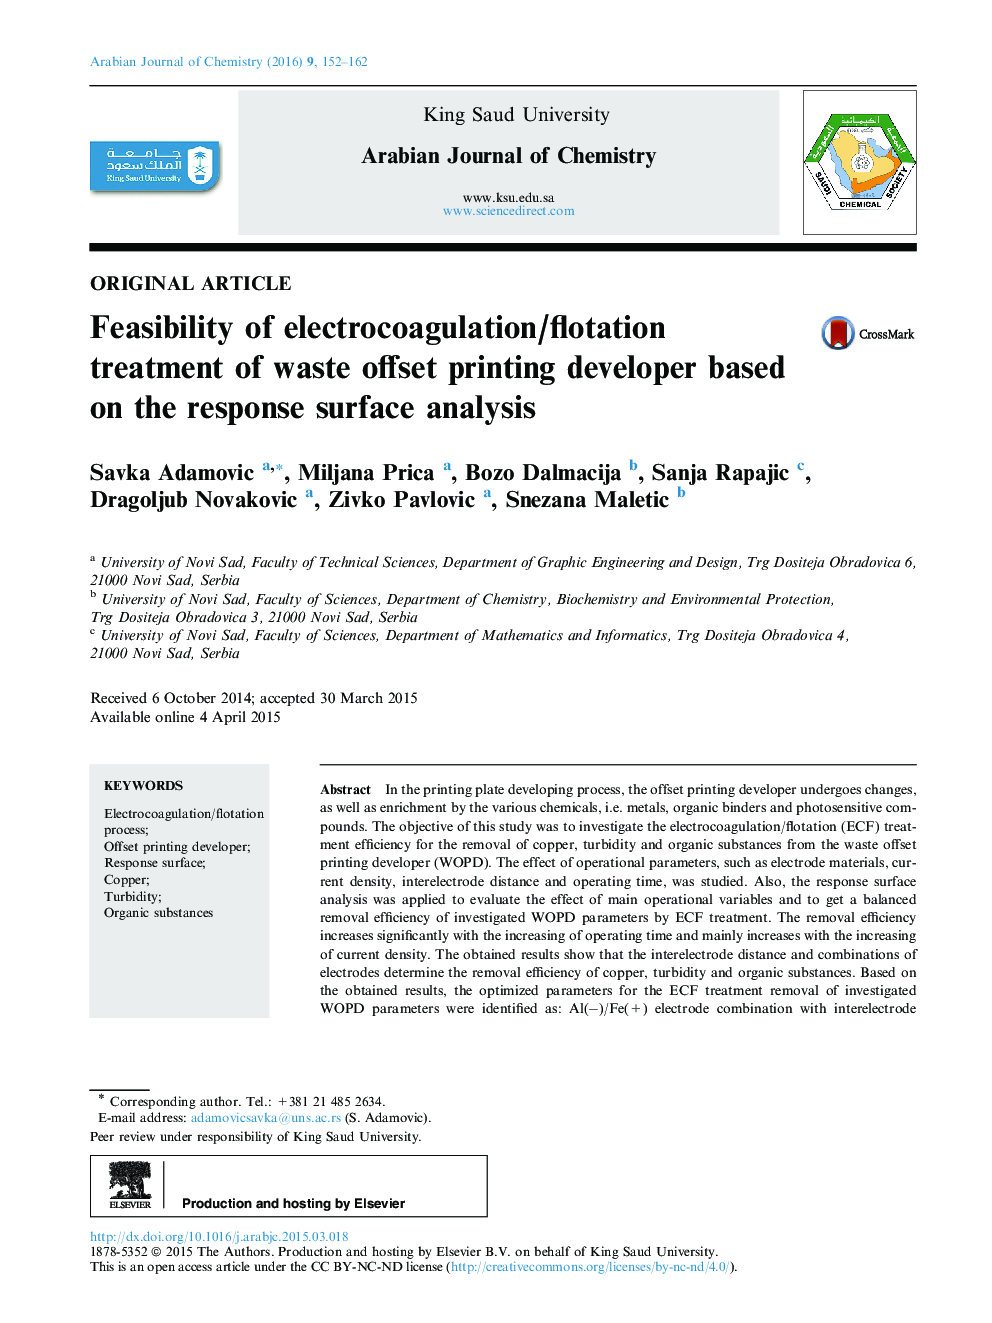 Feasibility of electrocoagulation/flotation treatment of waste offset printing developer based on the response surface analysis 